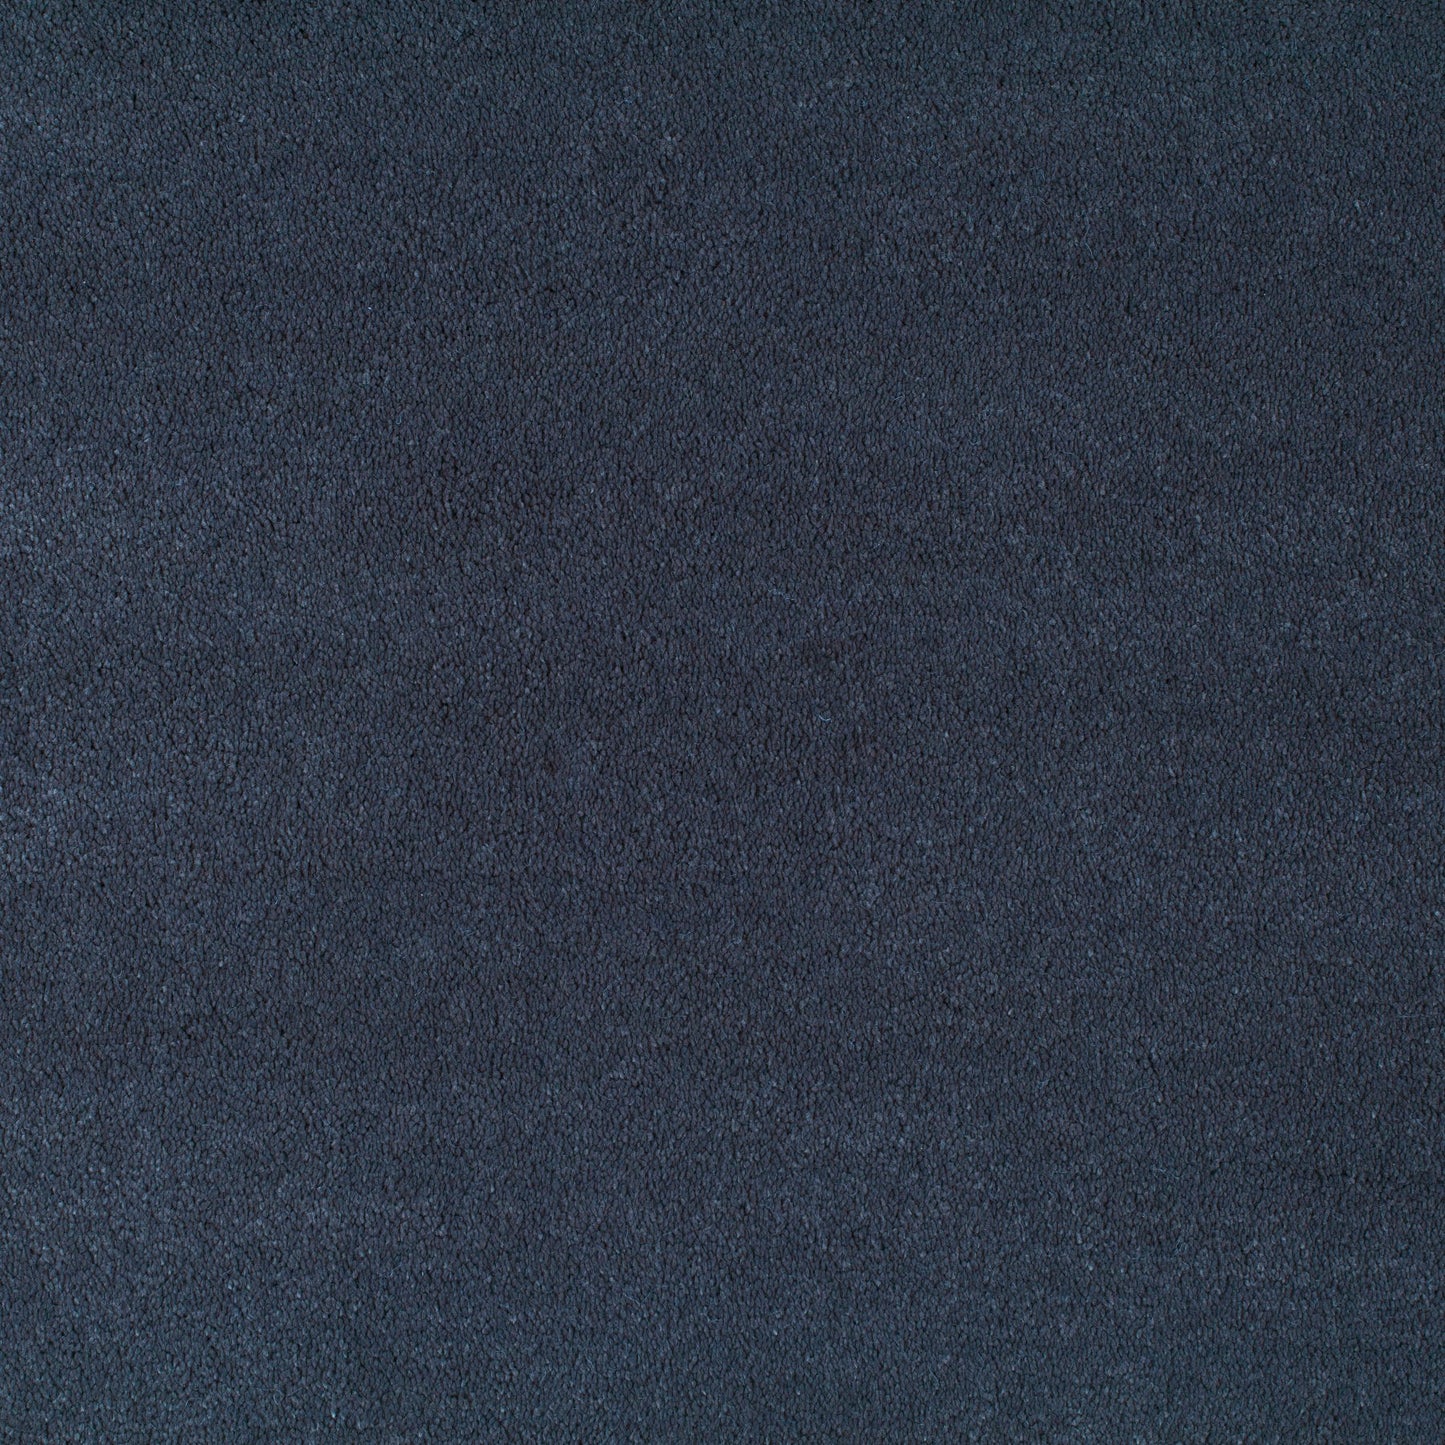 JAB Phantom Teppichboden - 3697/554 Blau